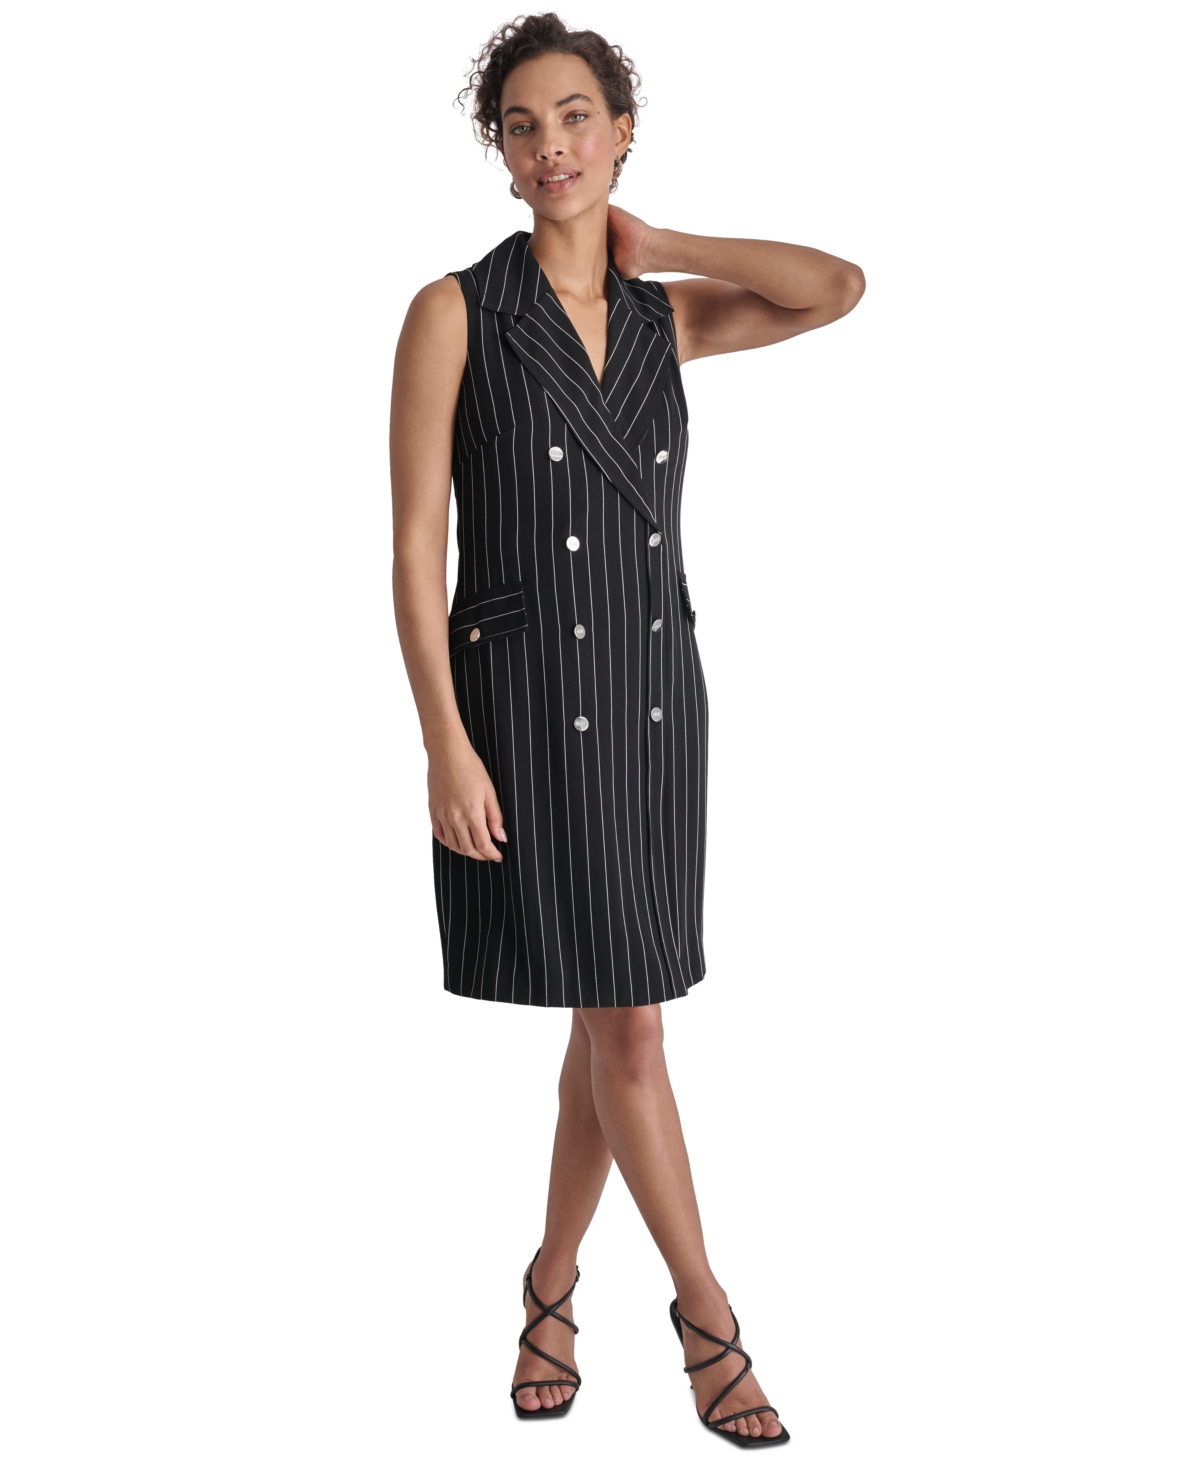 Women's Pinstriped Double-Breasted Blazer Dress - Black